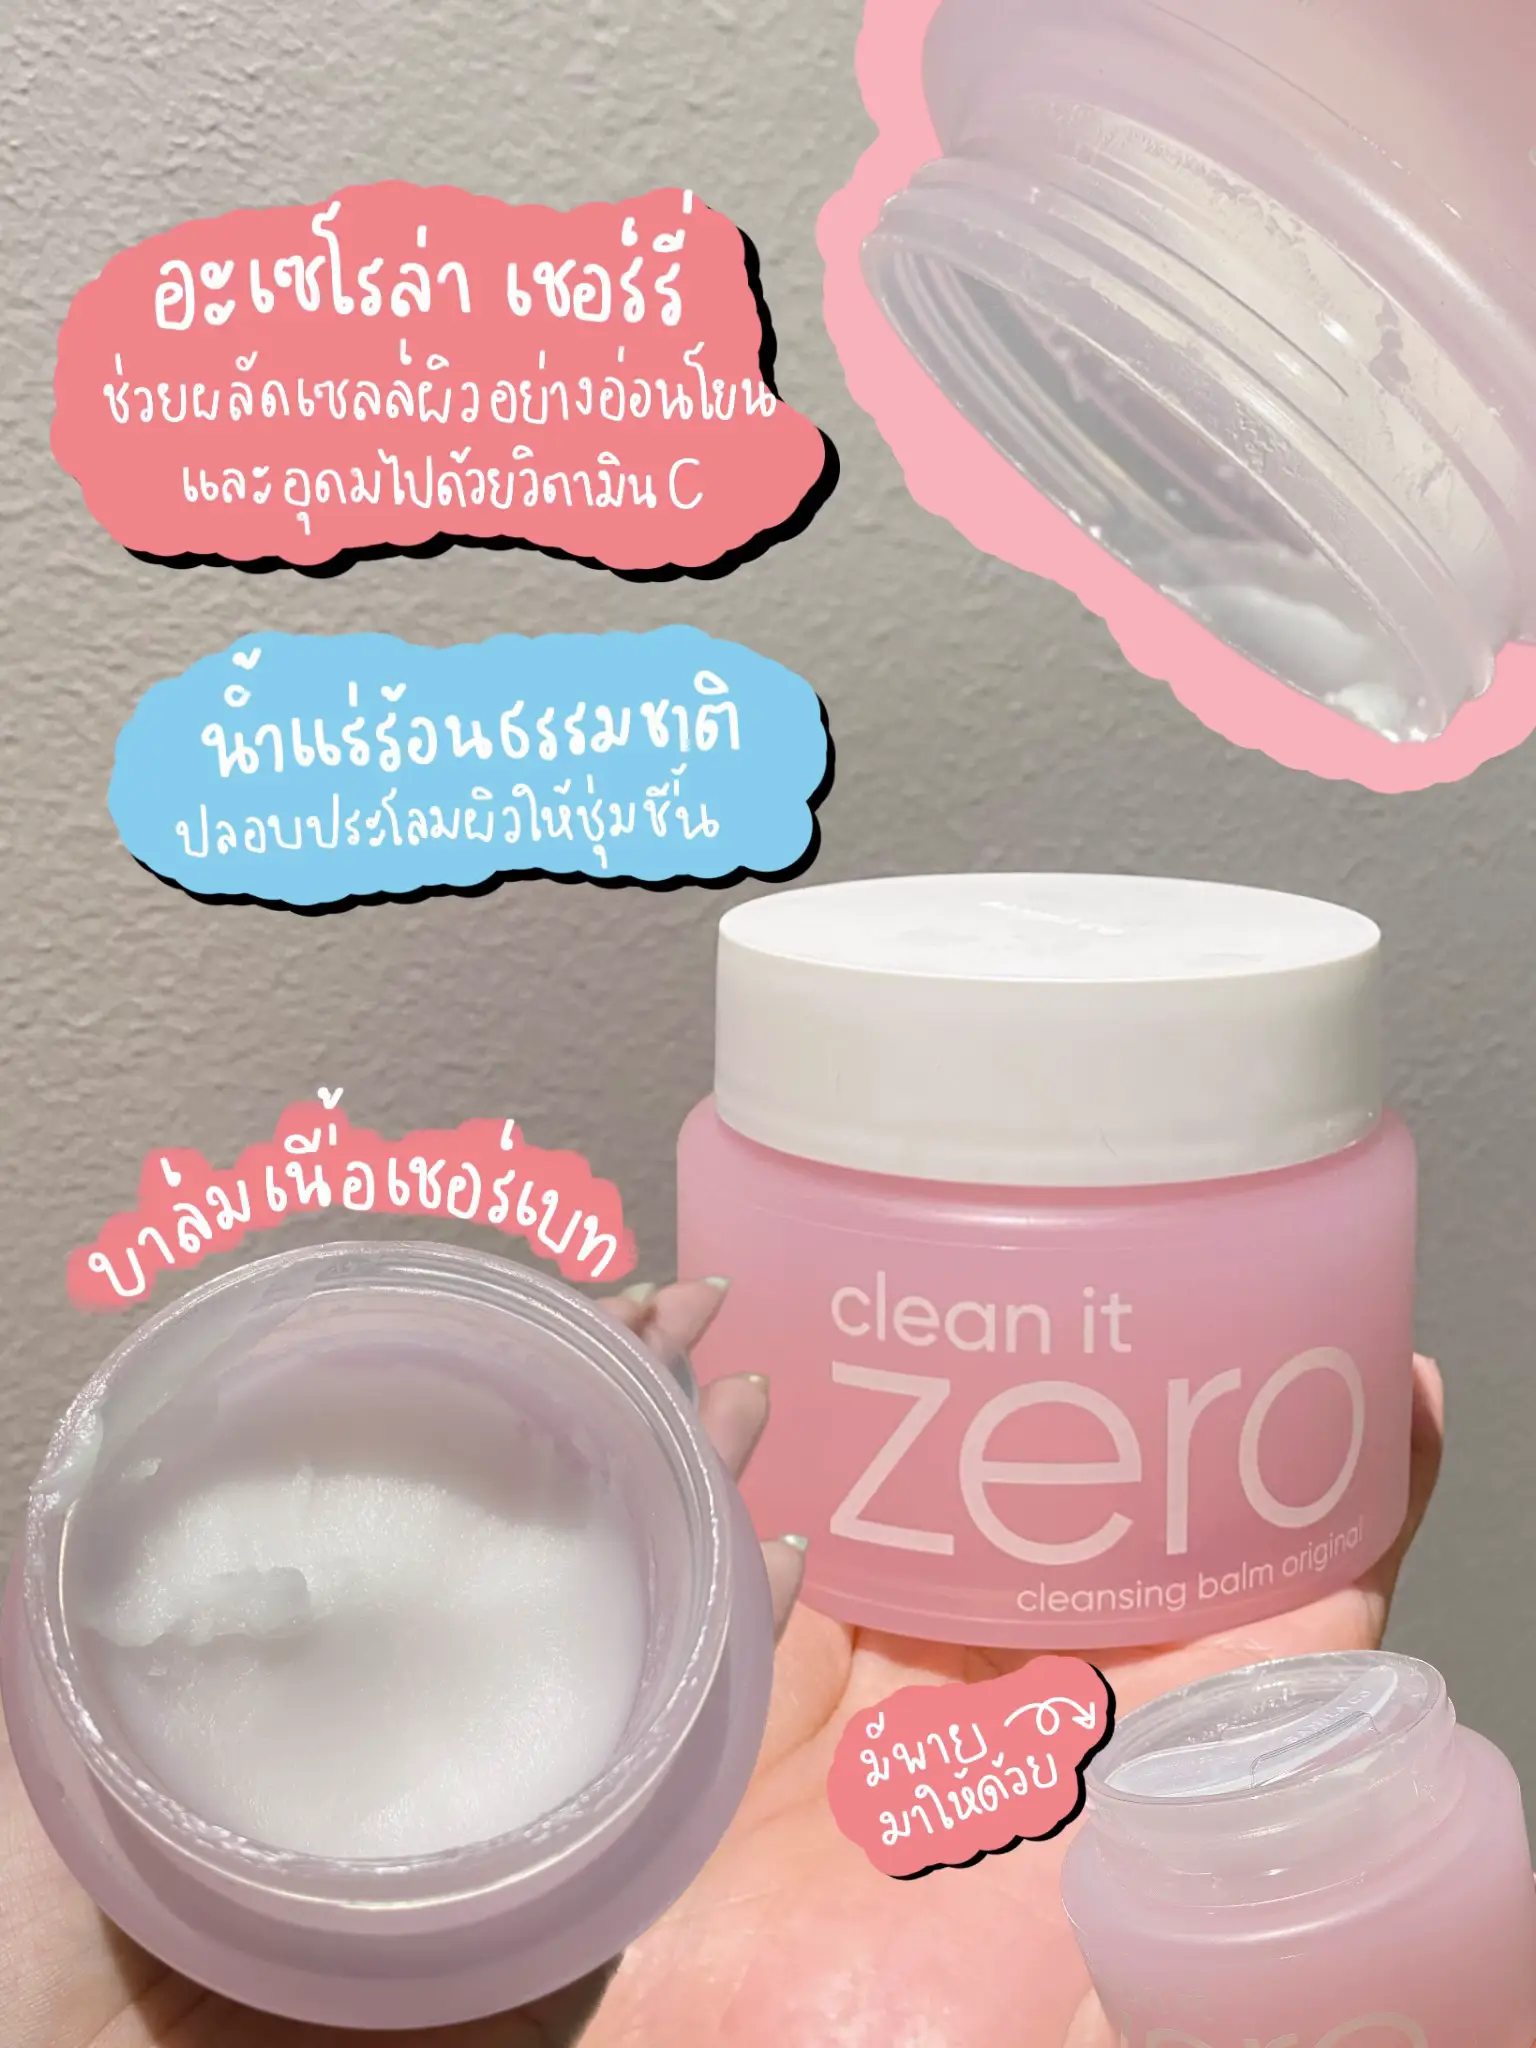 Banila Co Clean It Zero Cleansing Balm Original 7 ml